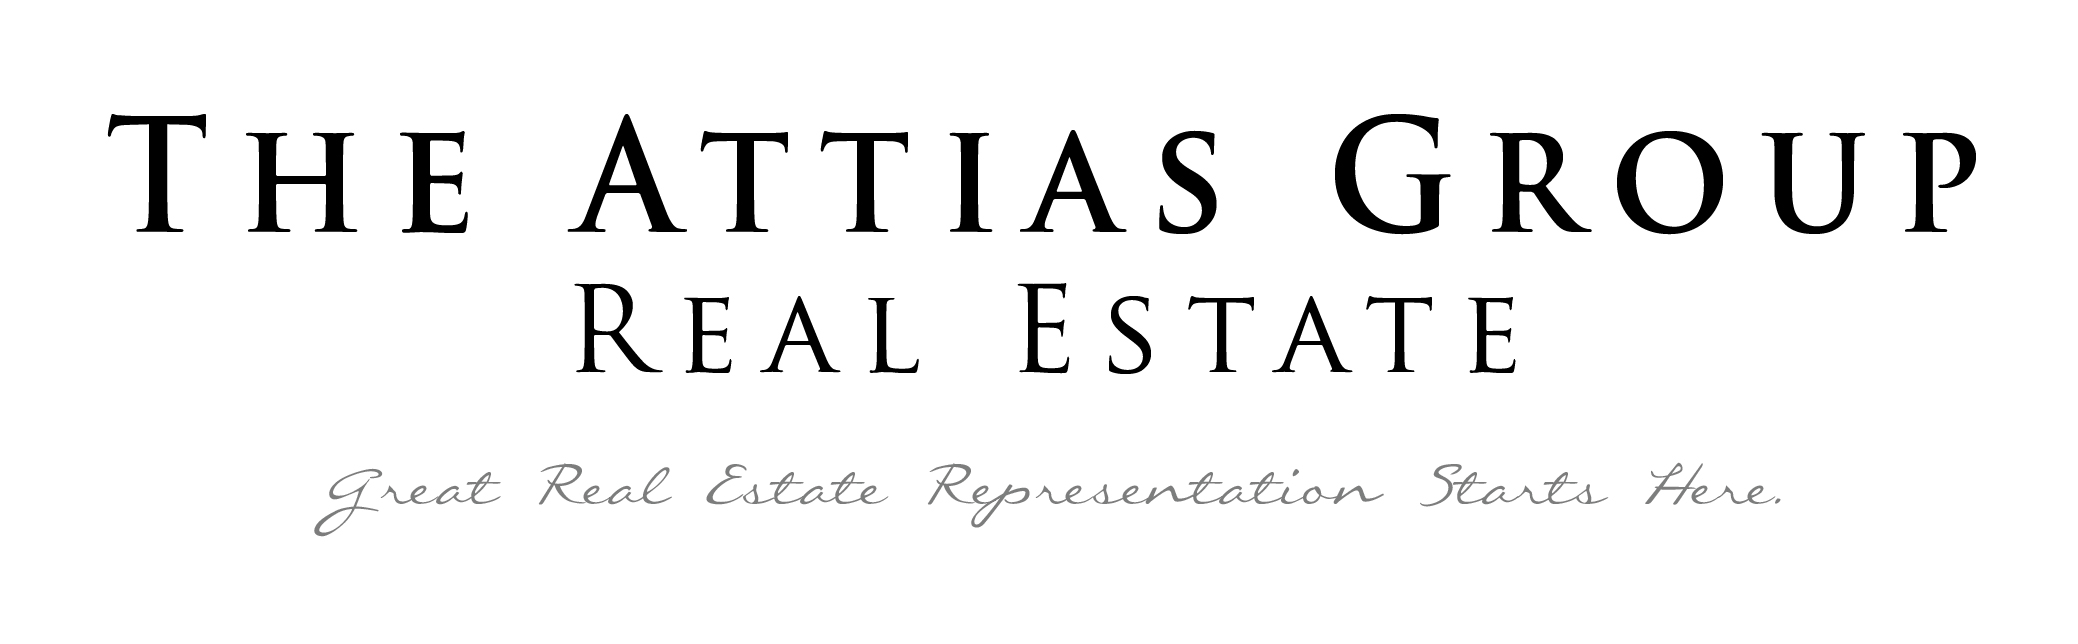 The Attias Group Real Estate